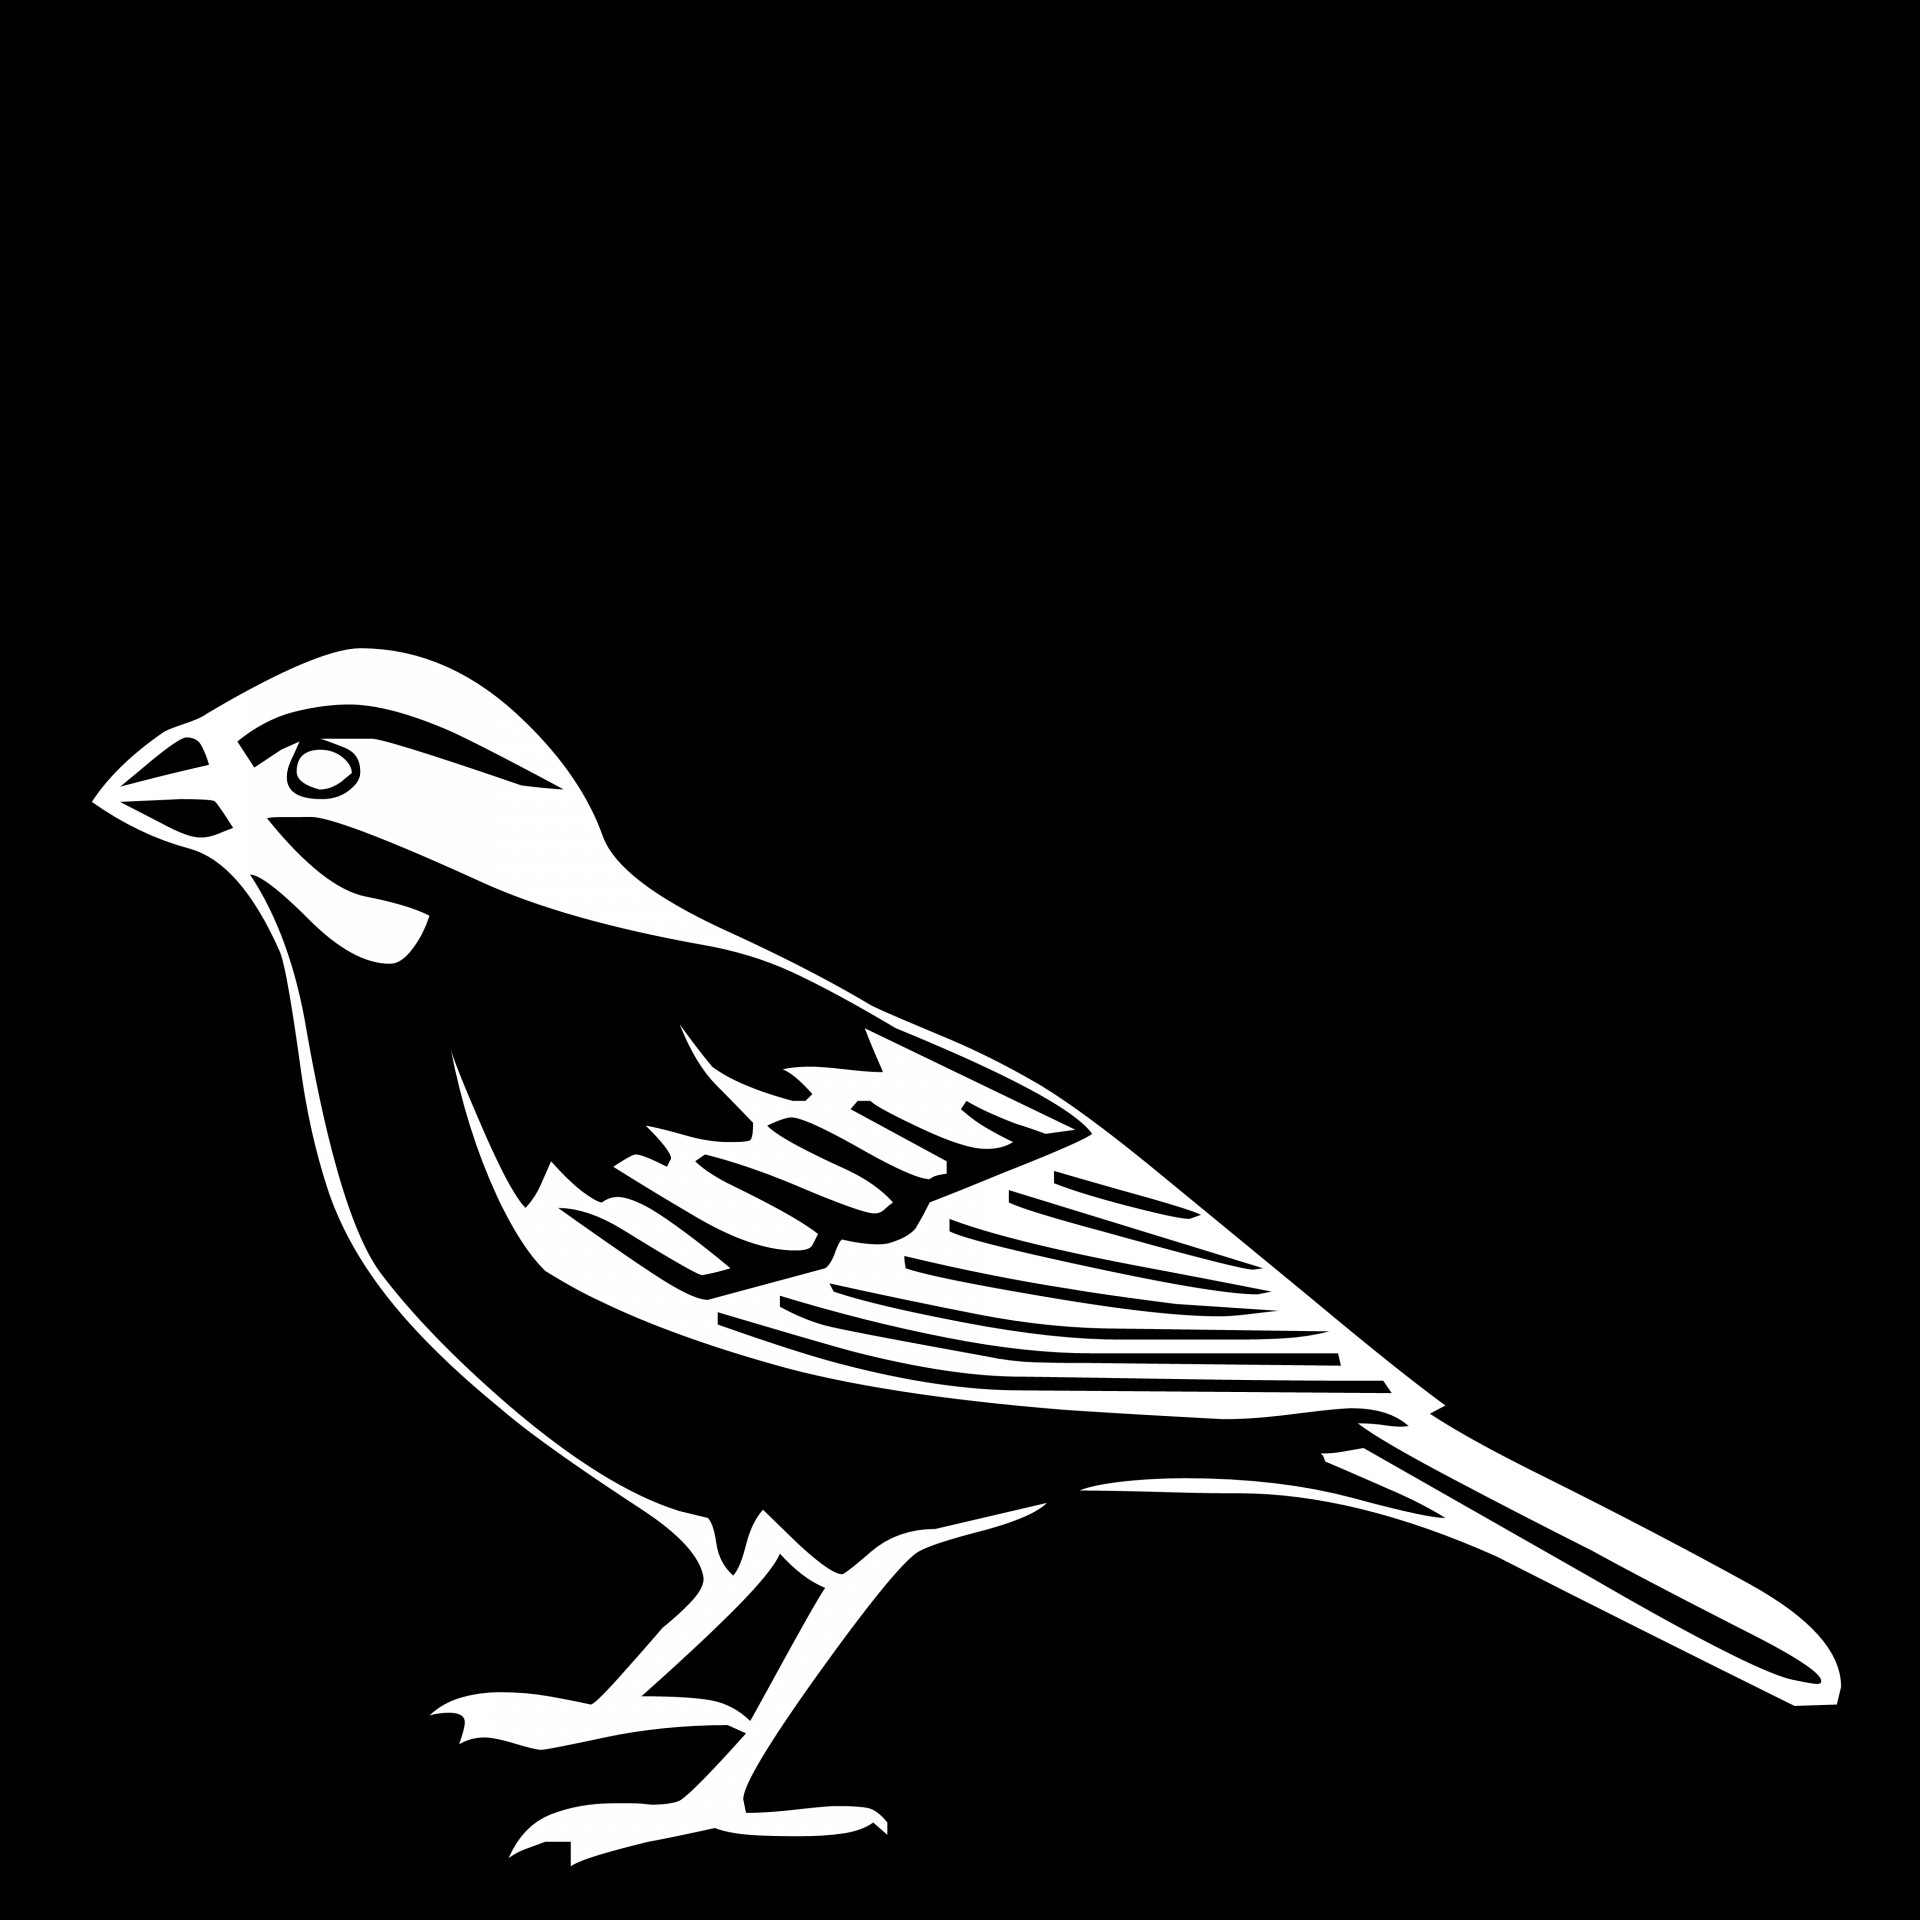 Drawing White Bird Black Background Free Image From Needpix Com